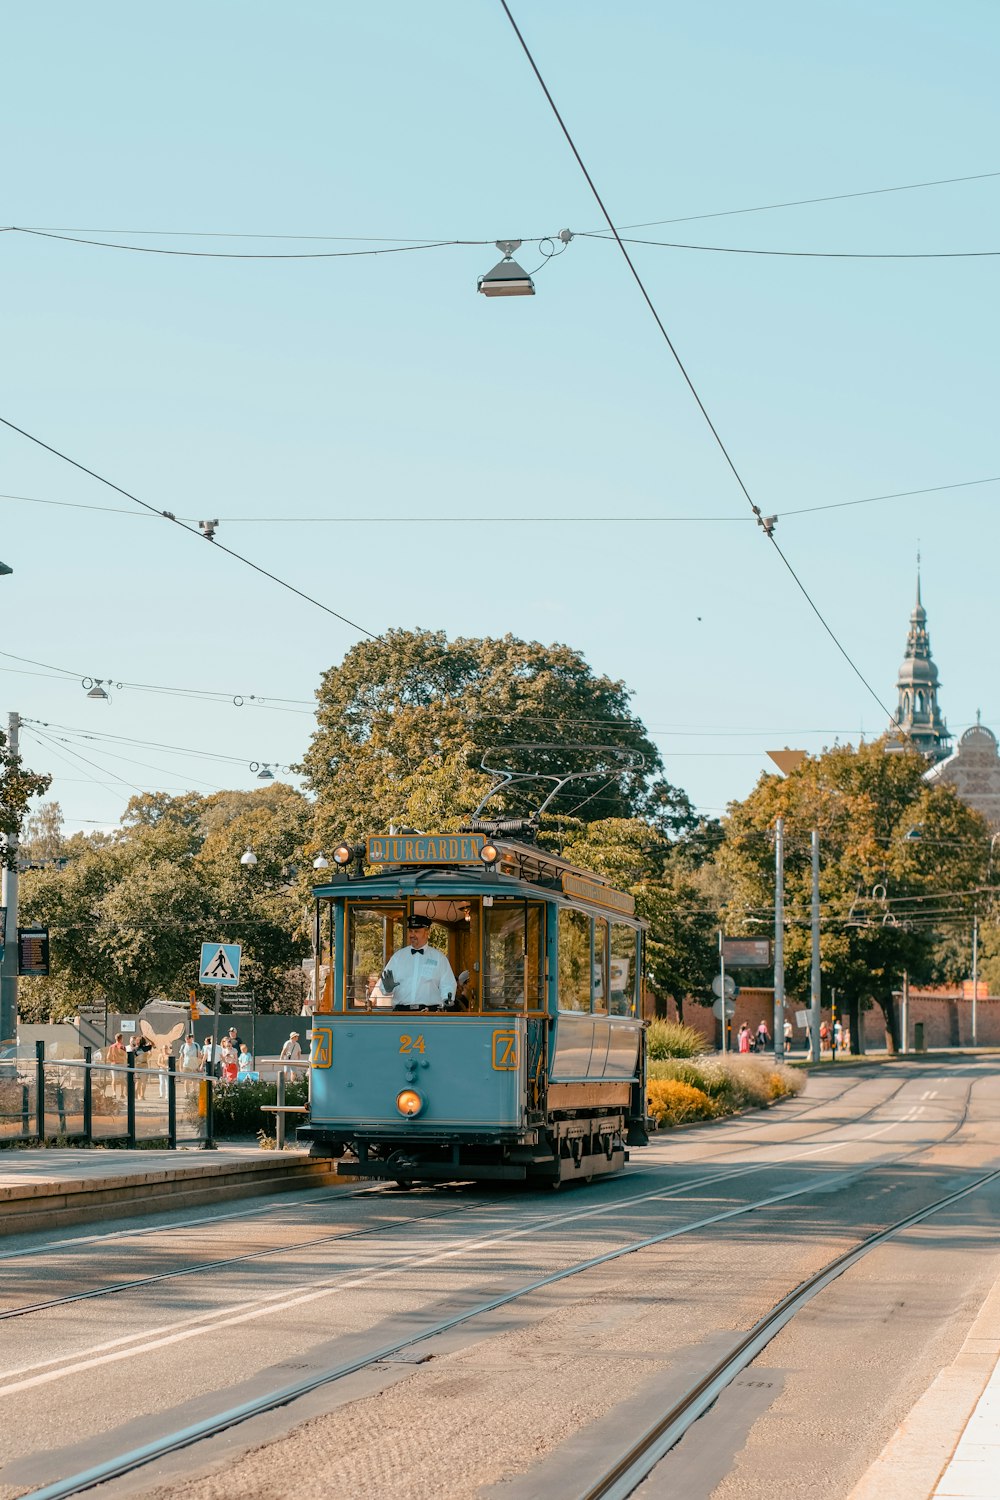 a blue trolley car traveling down a street